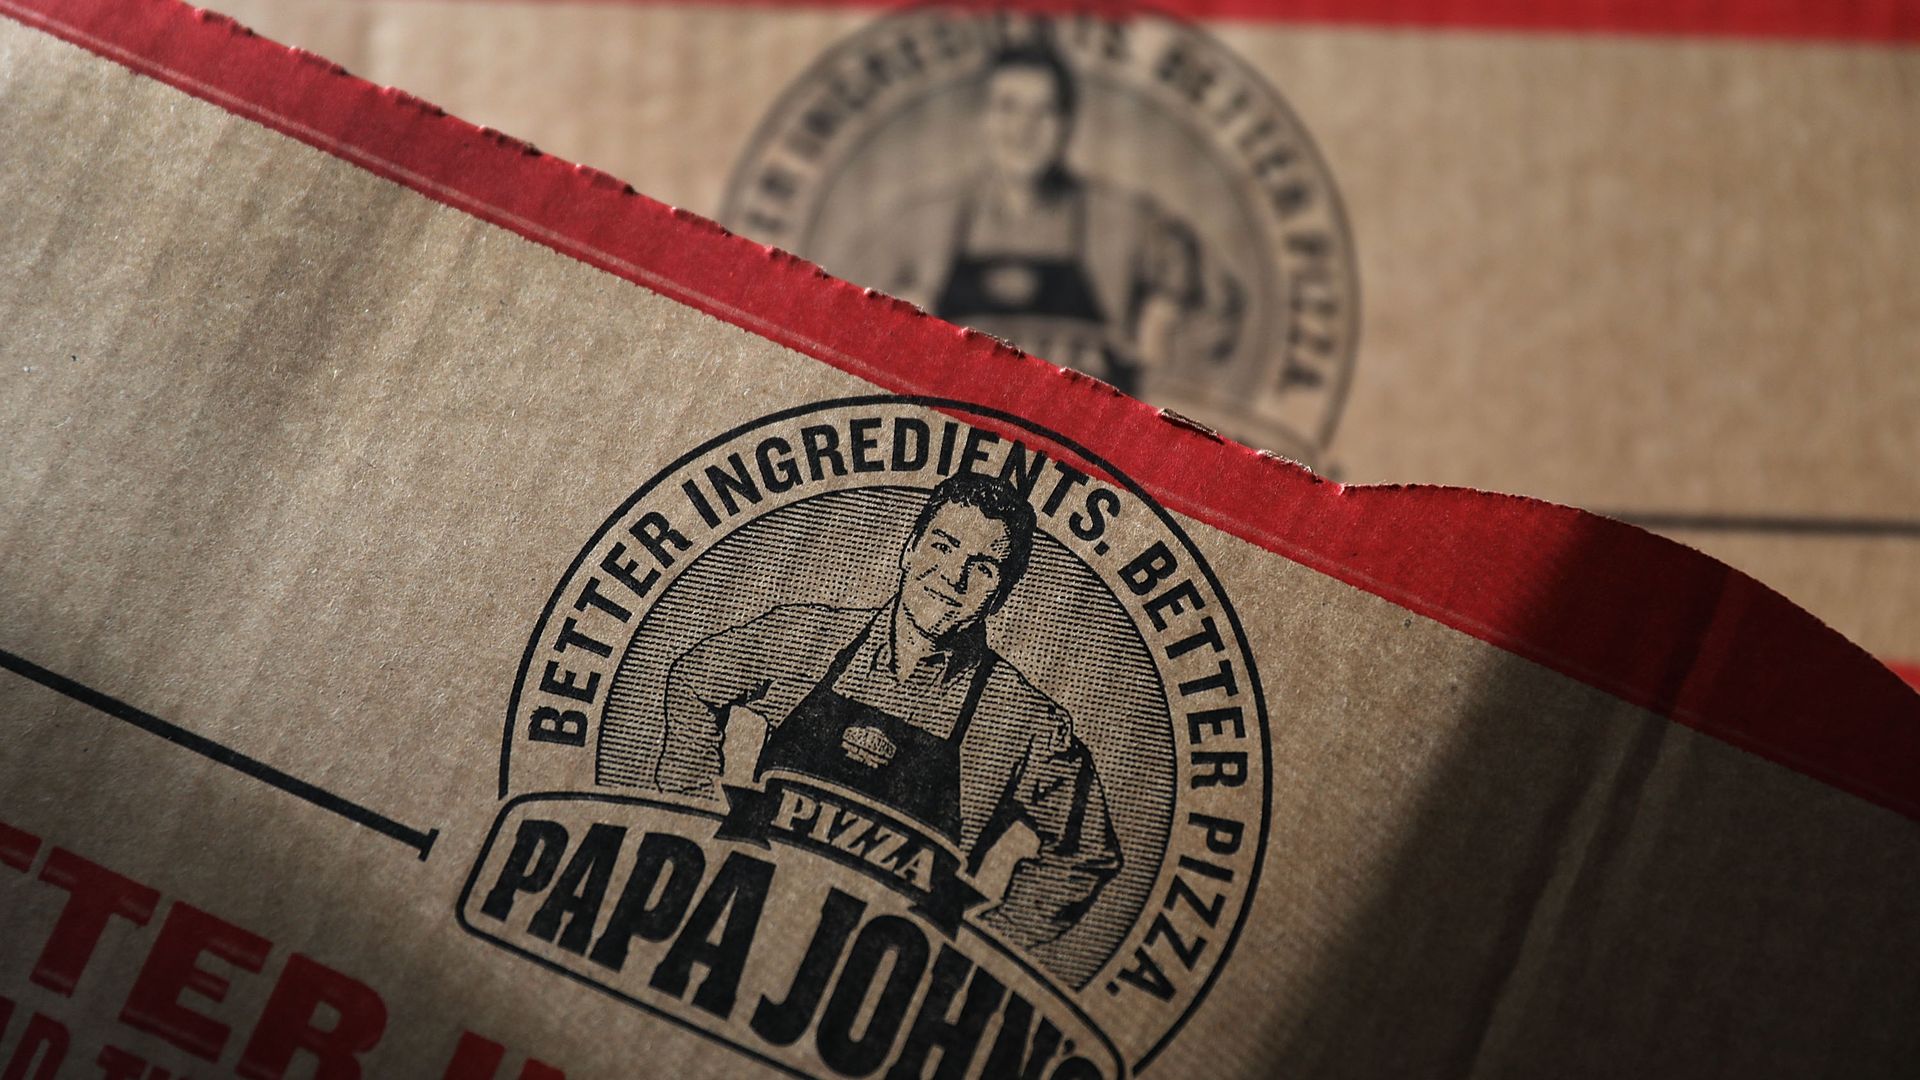 Papa John's pizza boxes